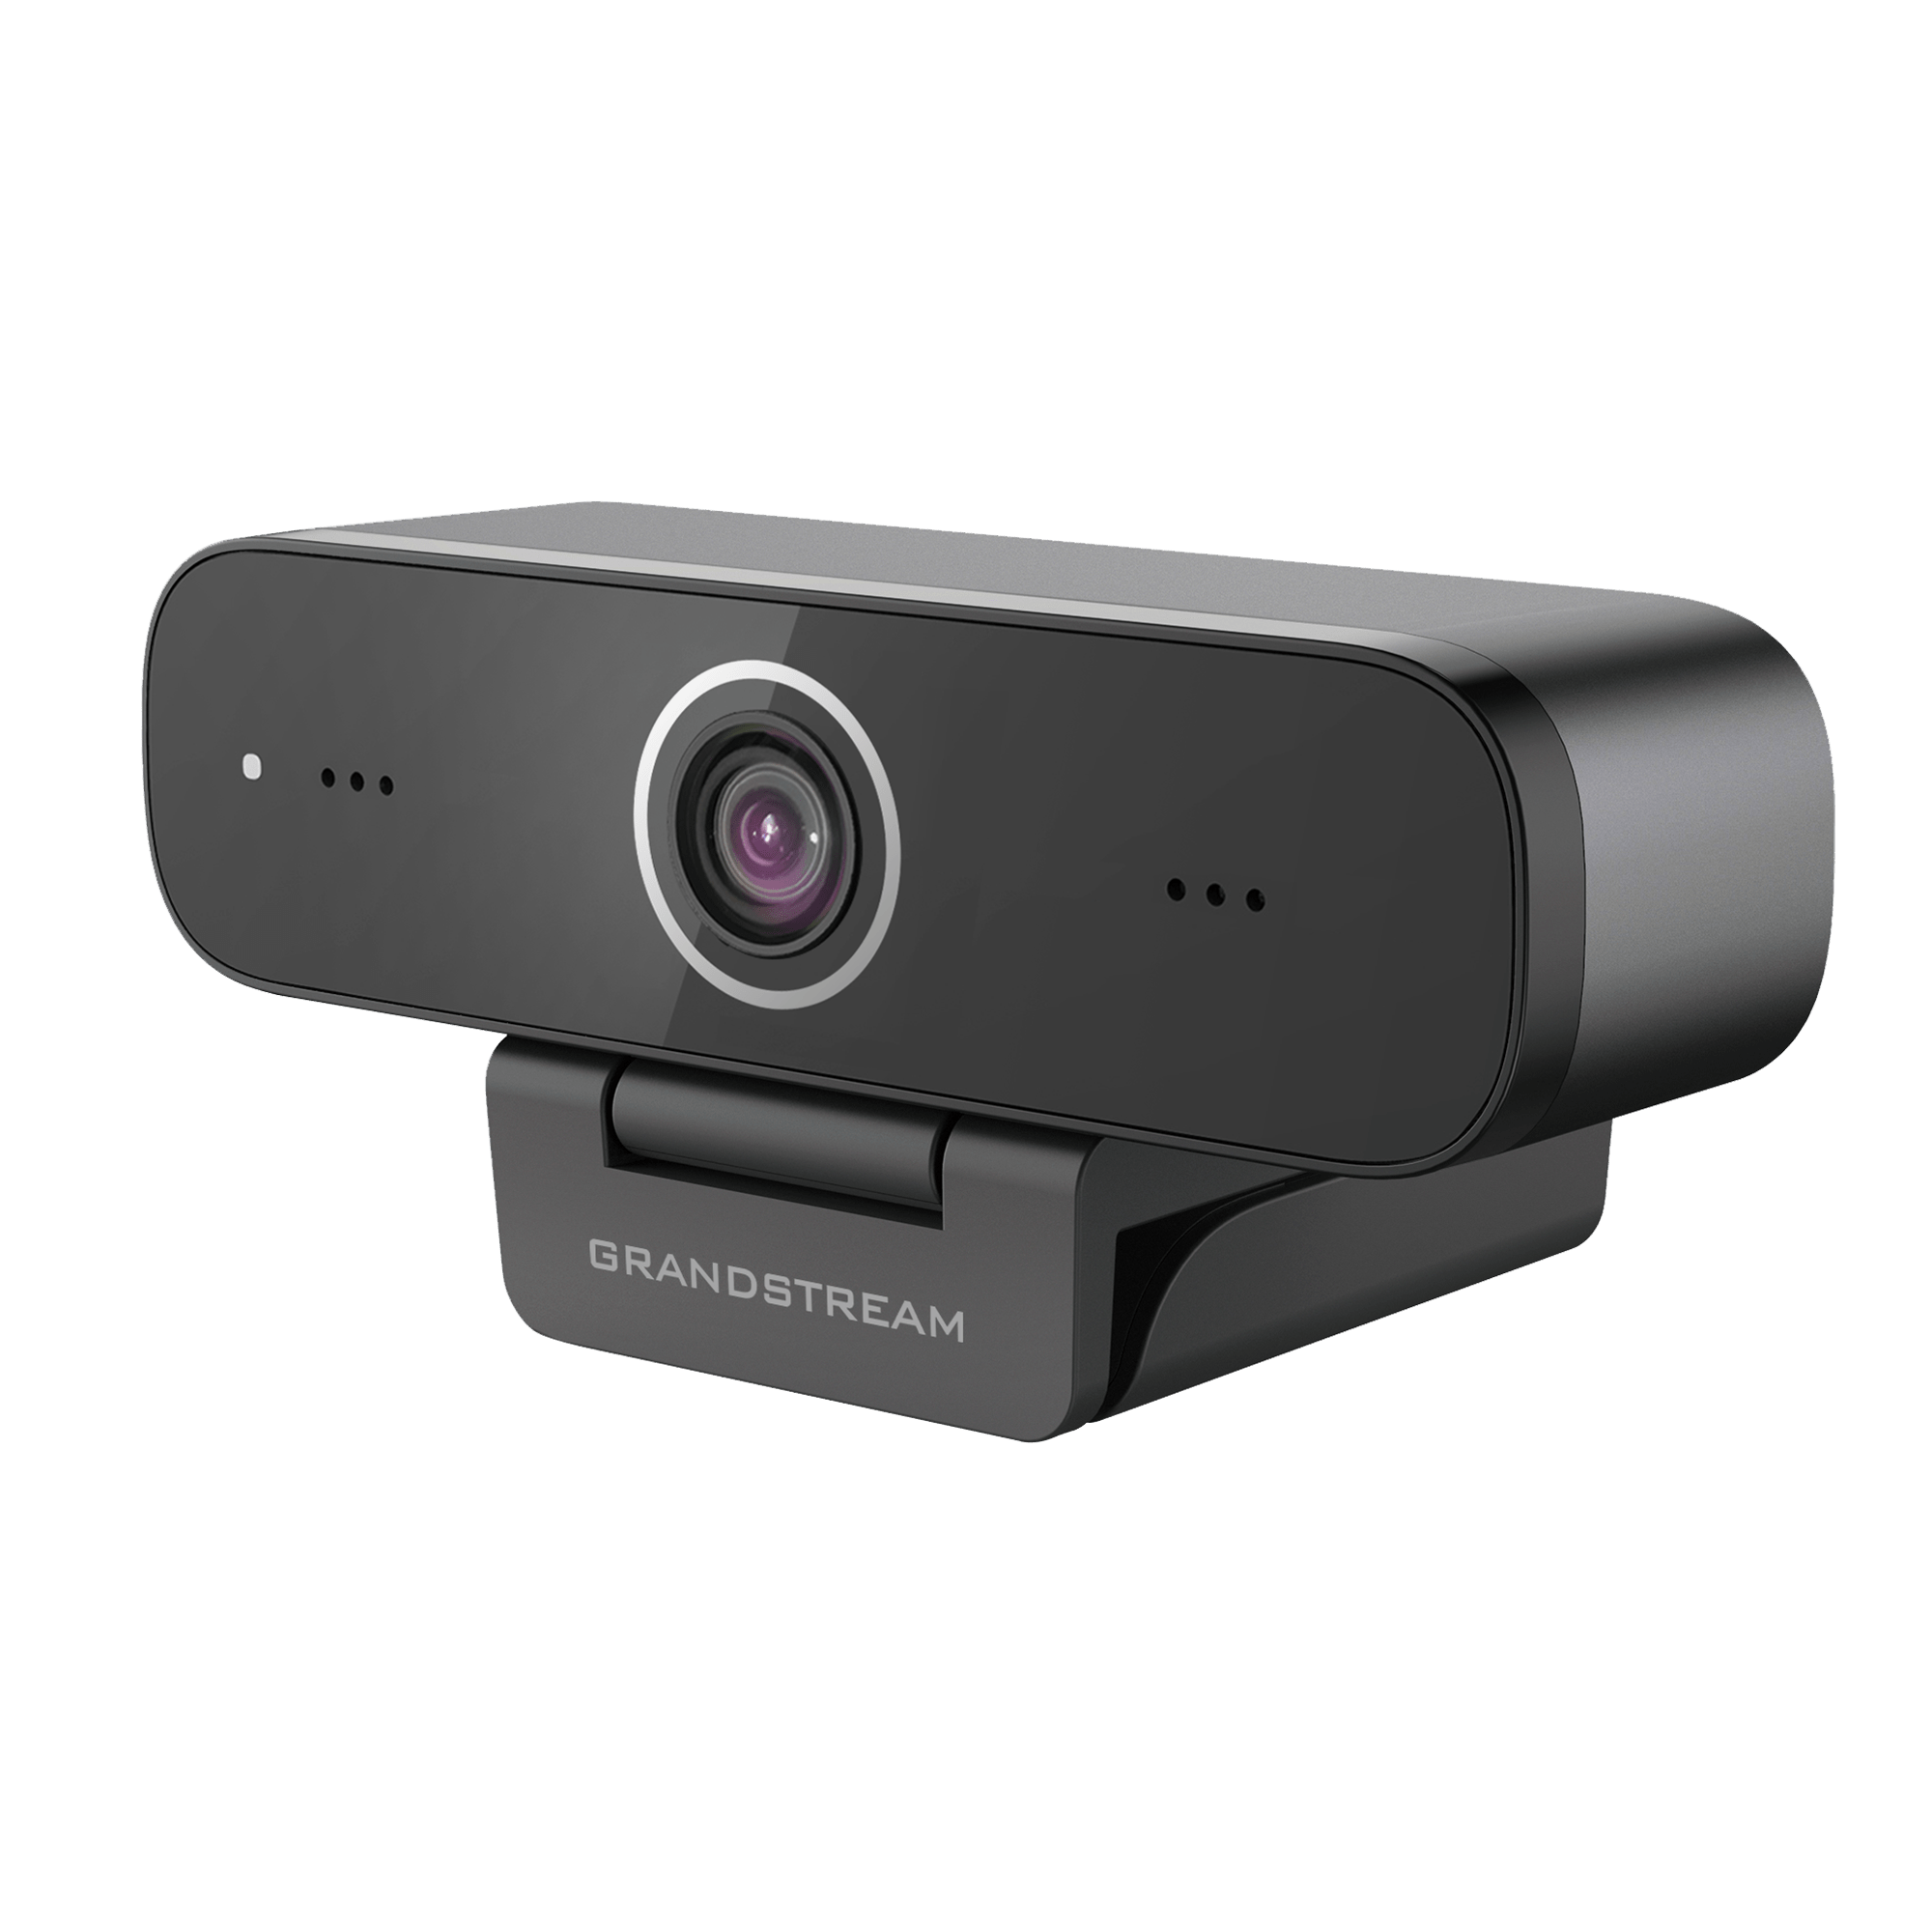 Grandstream GUV3100 HD USB 1080p Webcam side